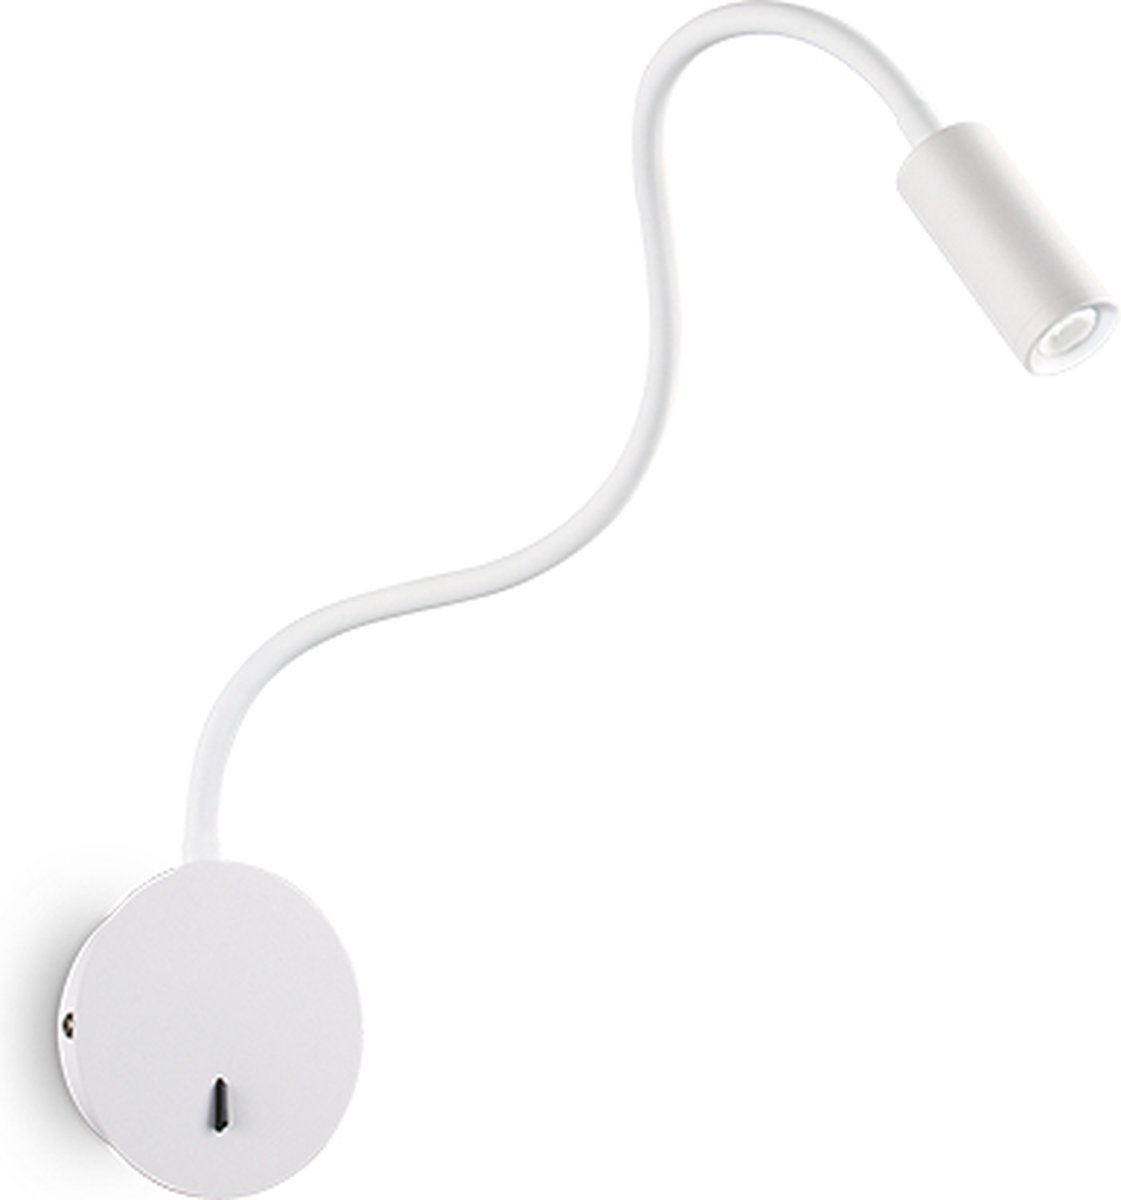 Ideal Lux - Focus - Wandlamp - Metaal - LED - Wit - Voor binnen - Lampen - Woonkamer - Eetkamer - Keuken